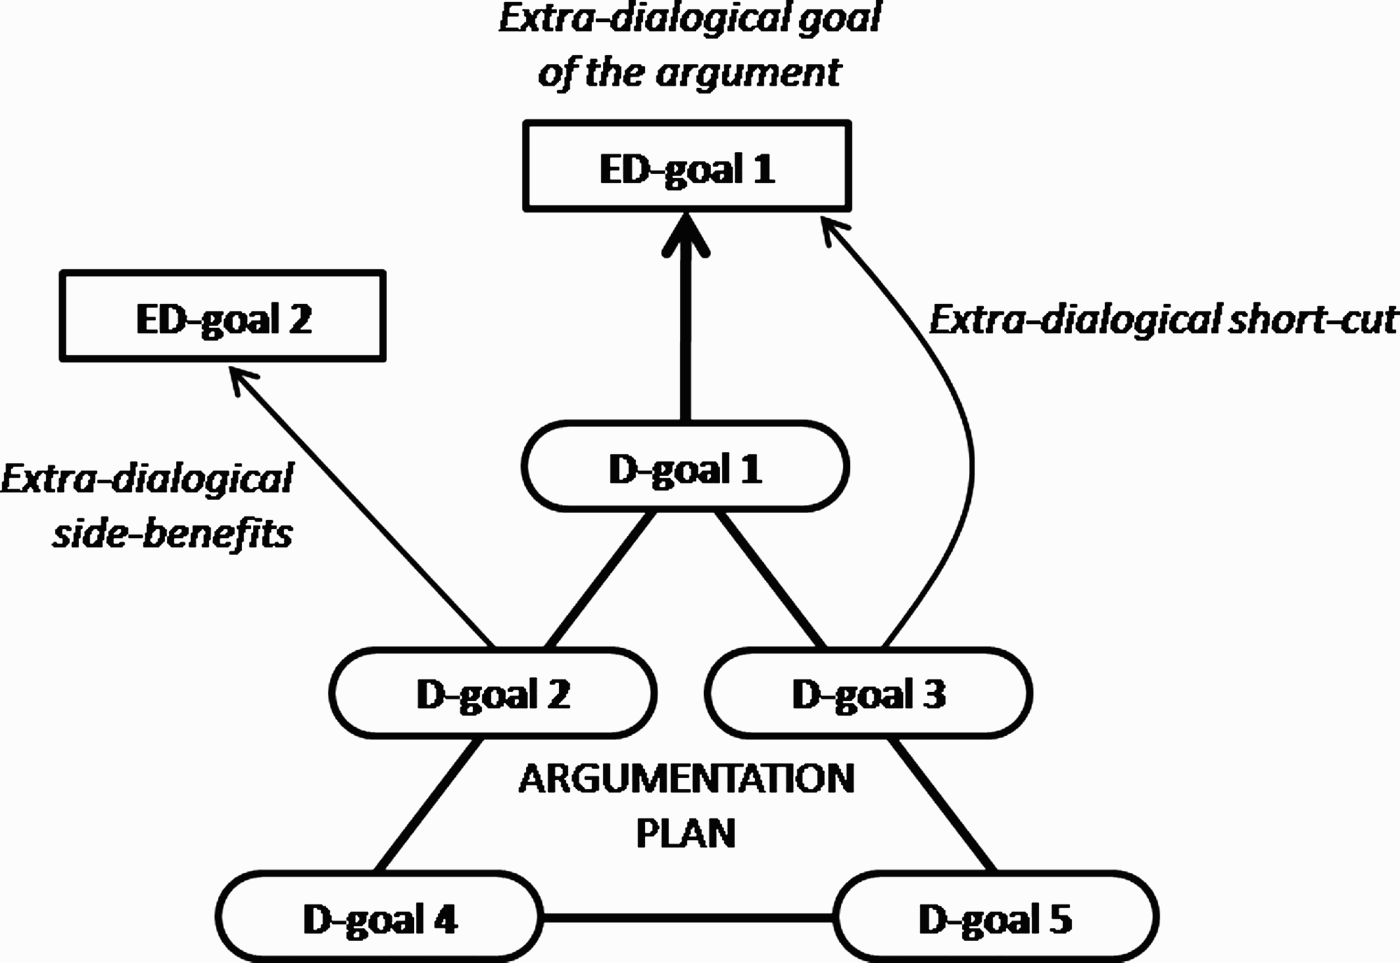 Dialogical and extra-dialogical goals of argumentation.